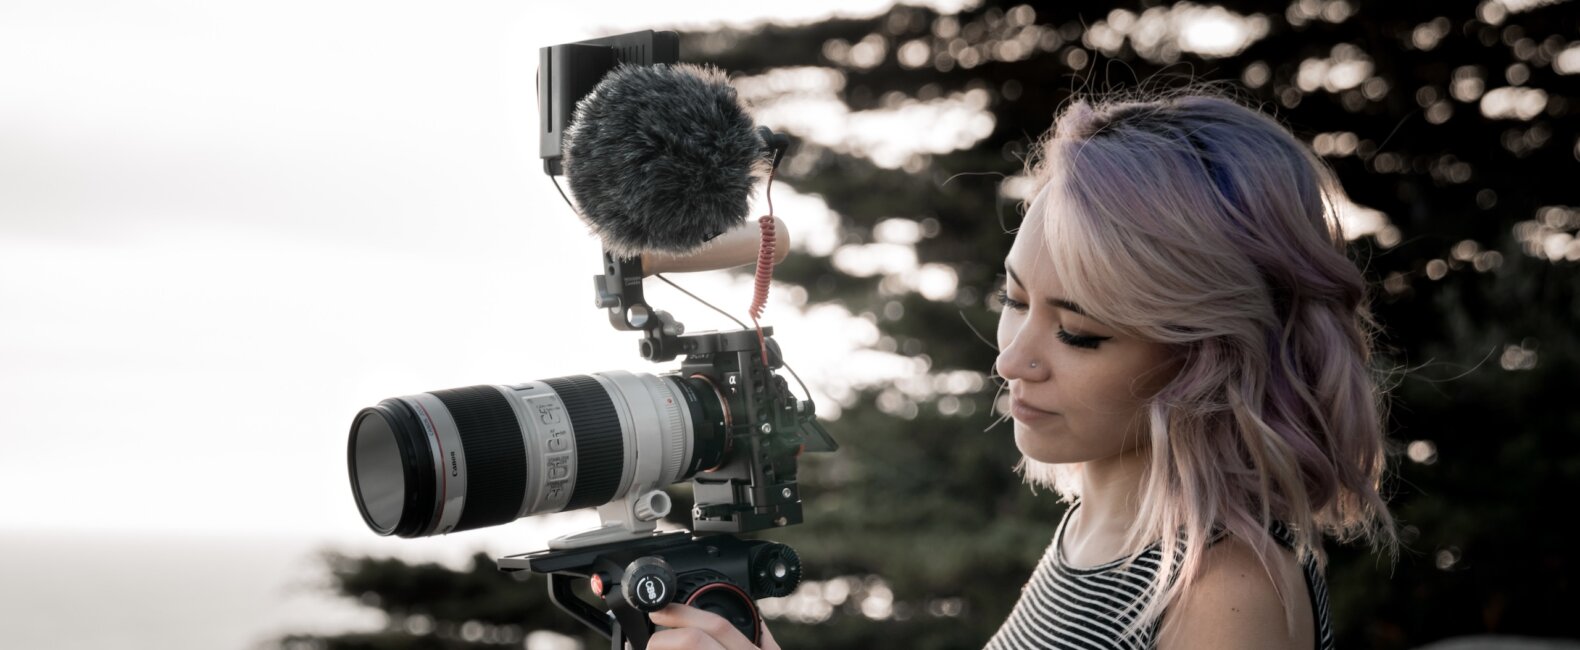 Cinematographer Kitty Peters